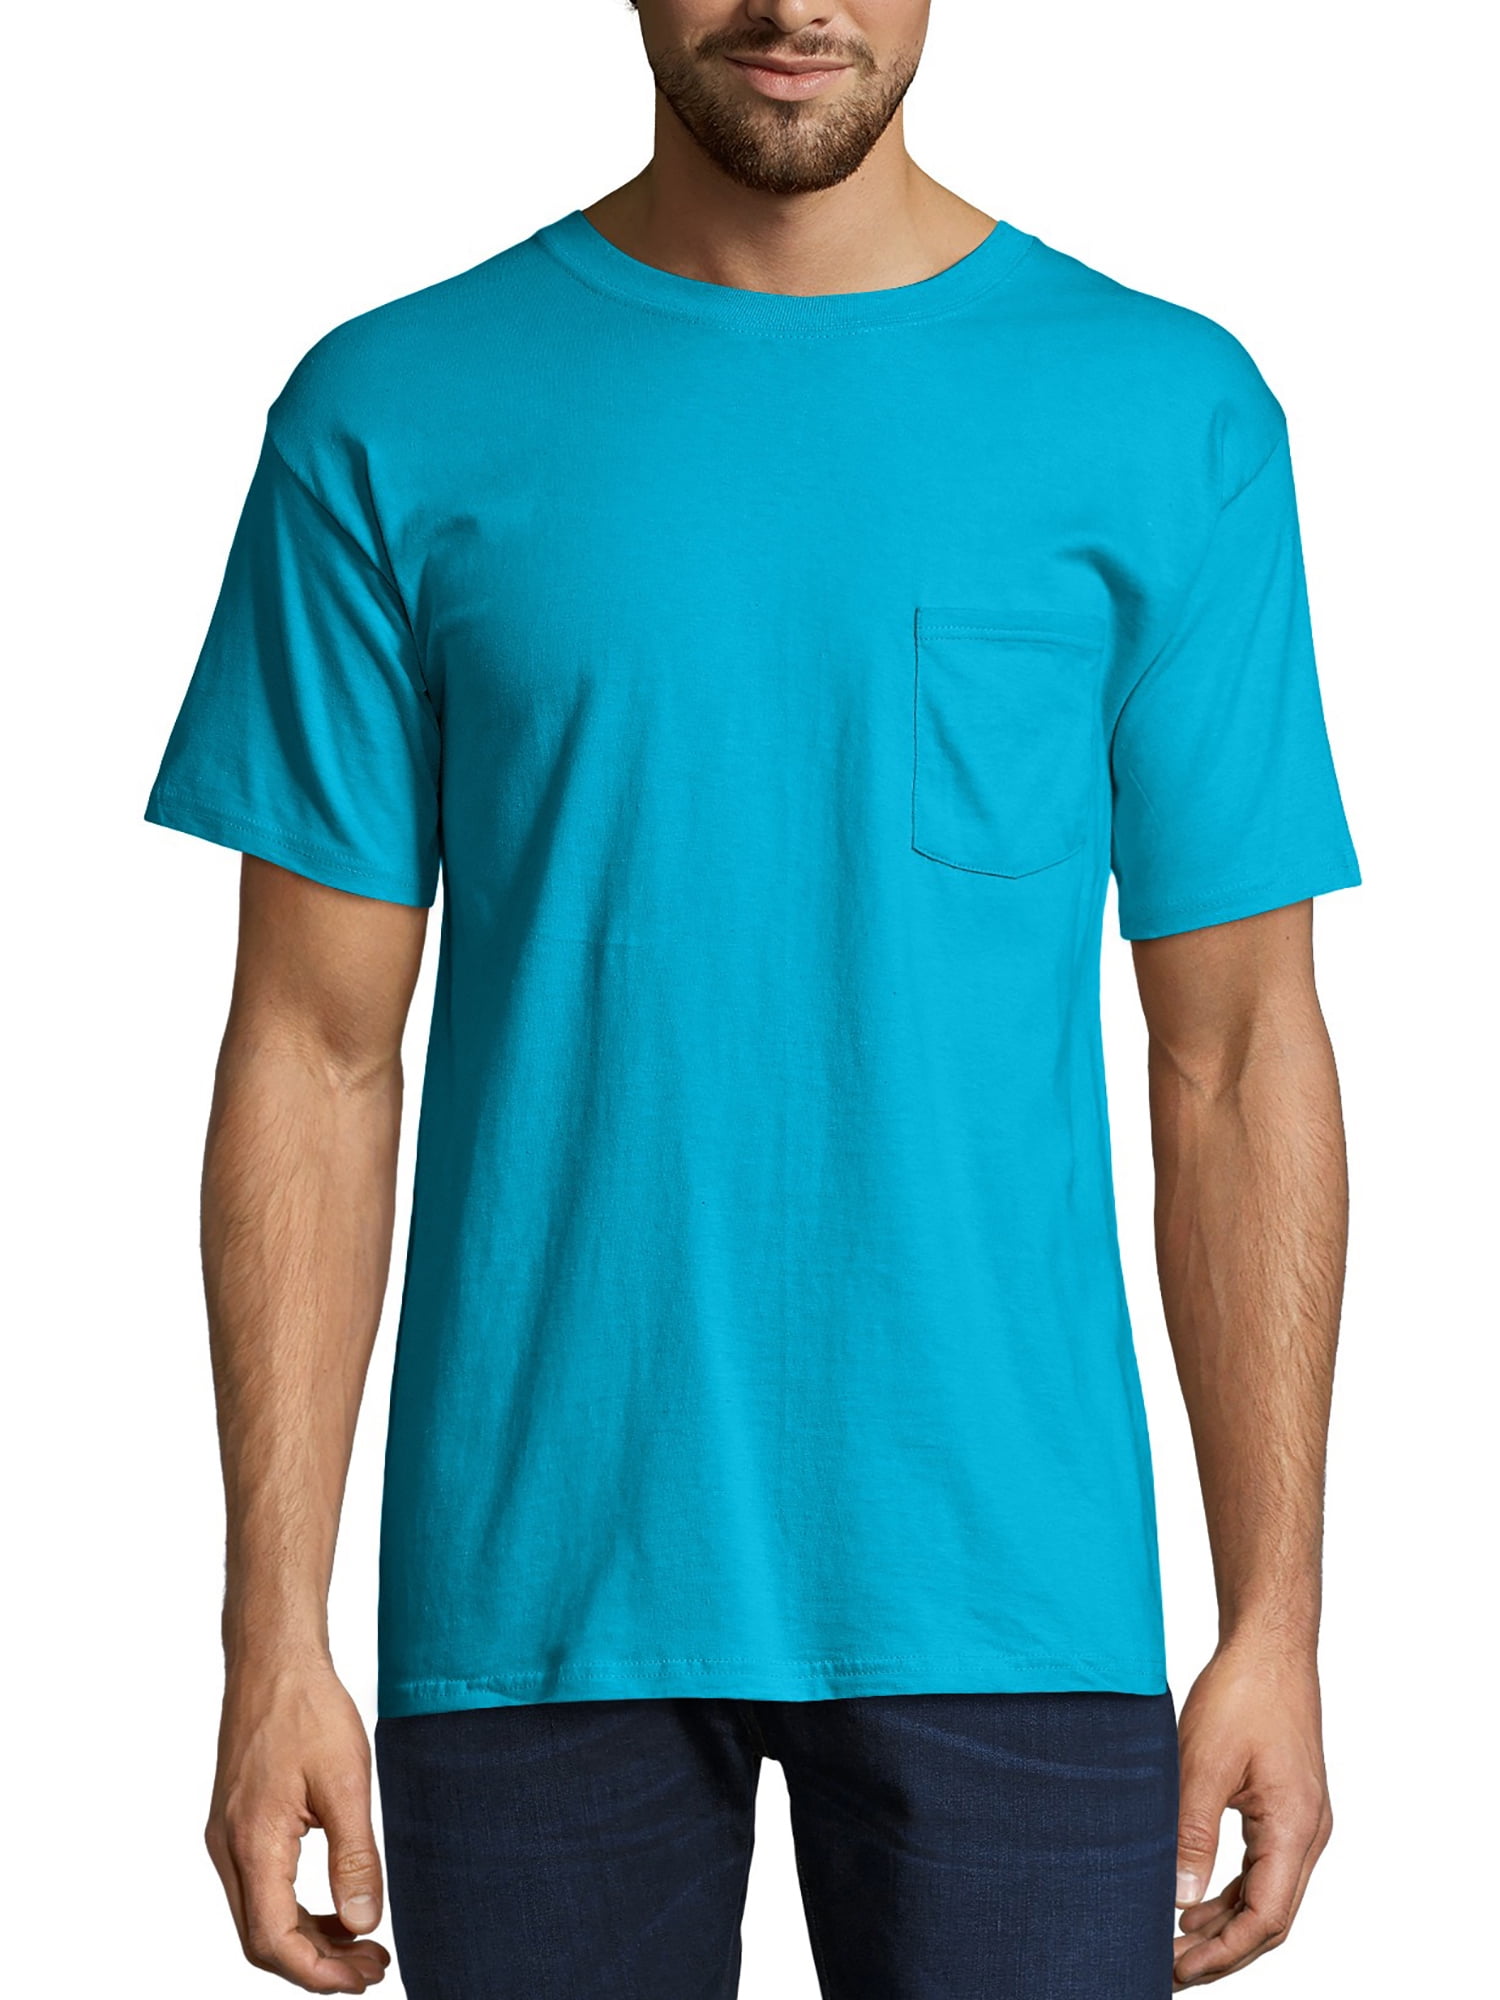 Hanes - Hanes Men's Premium Beefy-T Short Sleeve T-Shirt With Pocket